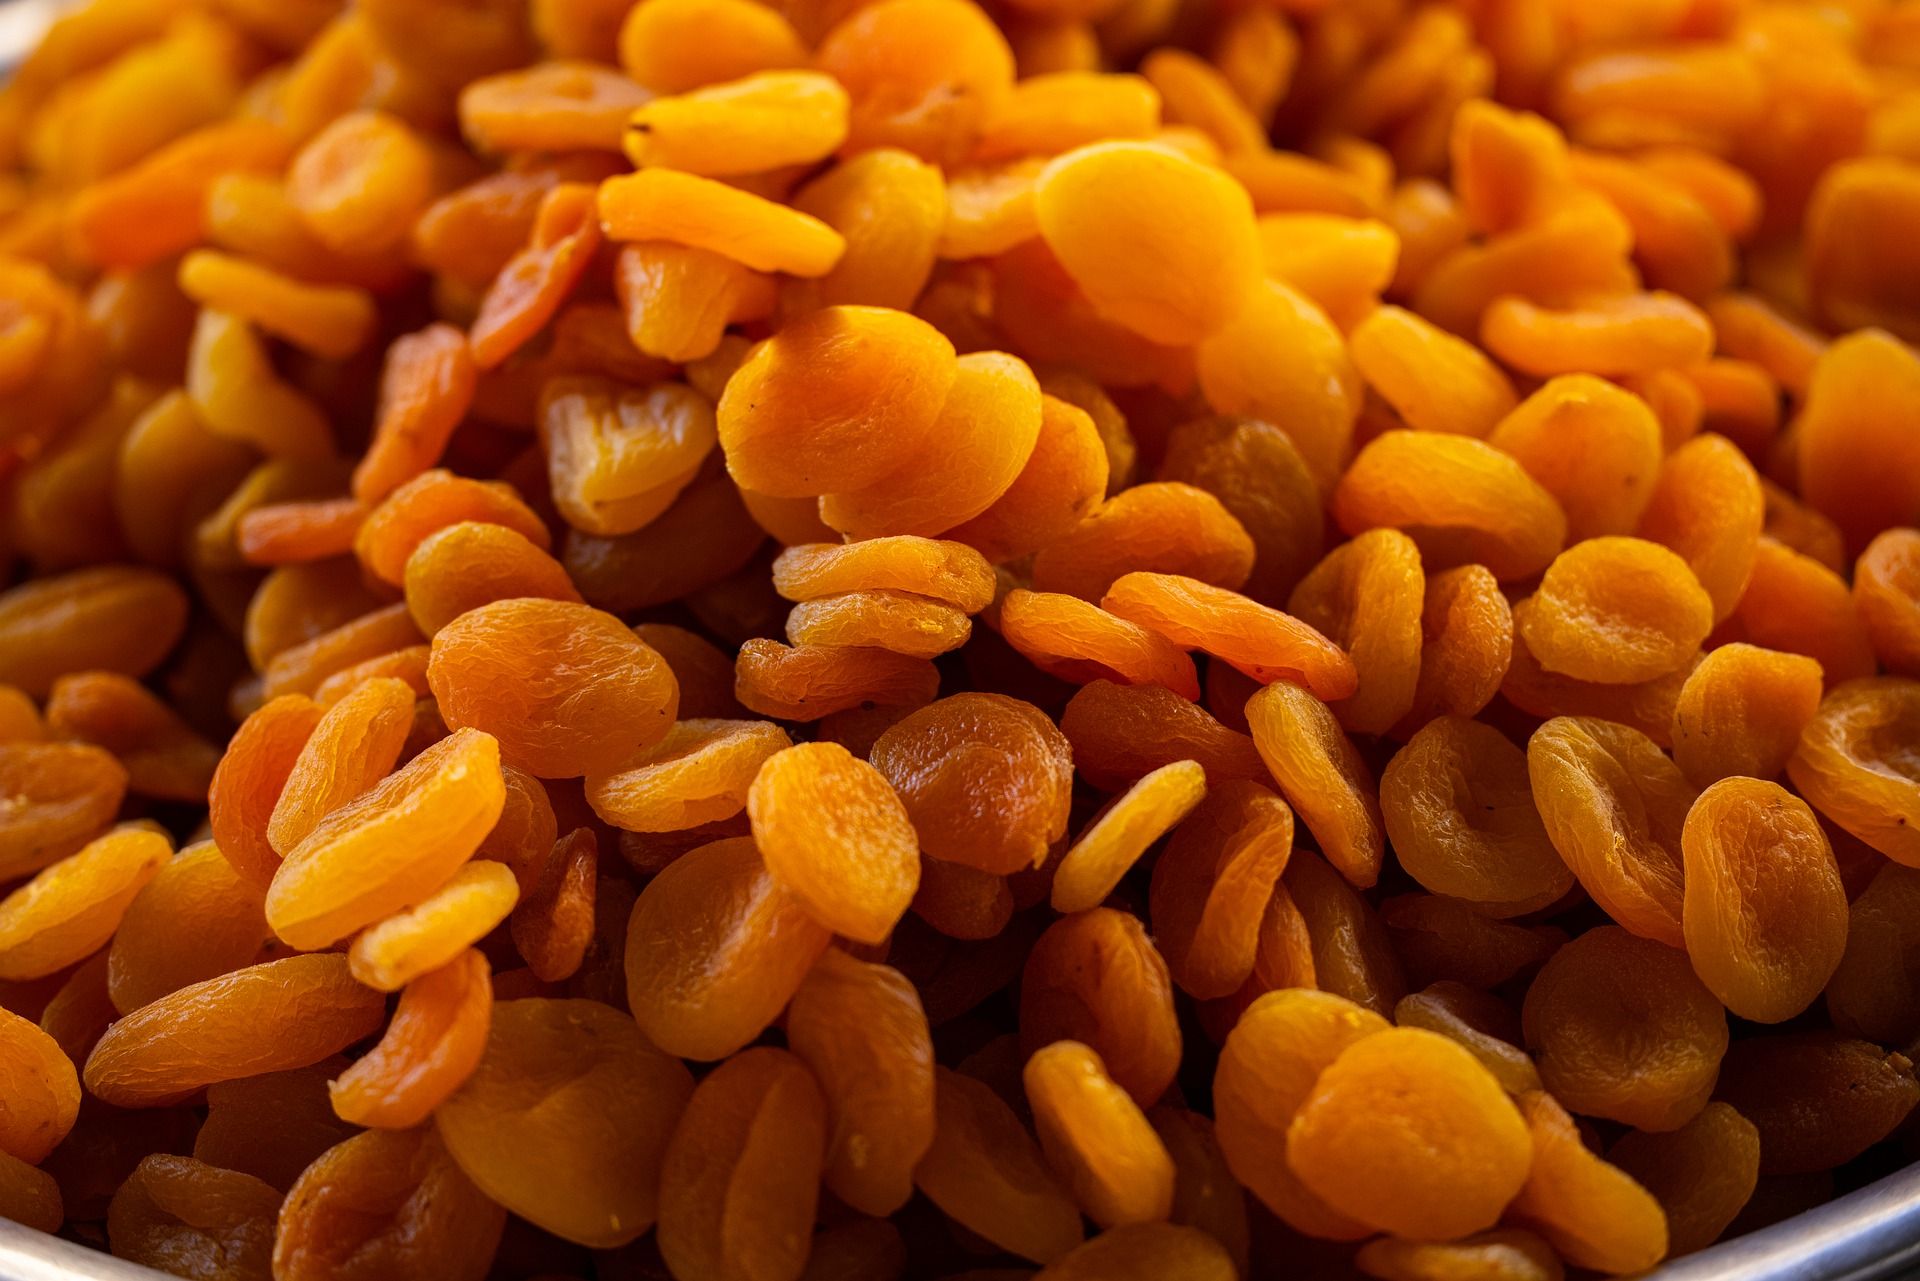 Abricots secs bruns Bio – GOJI MAROC